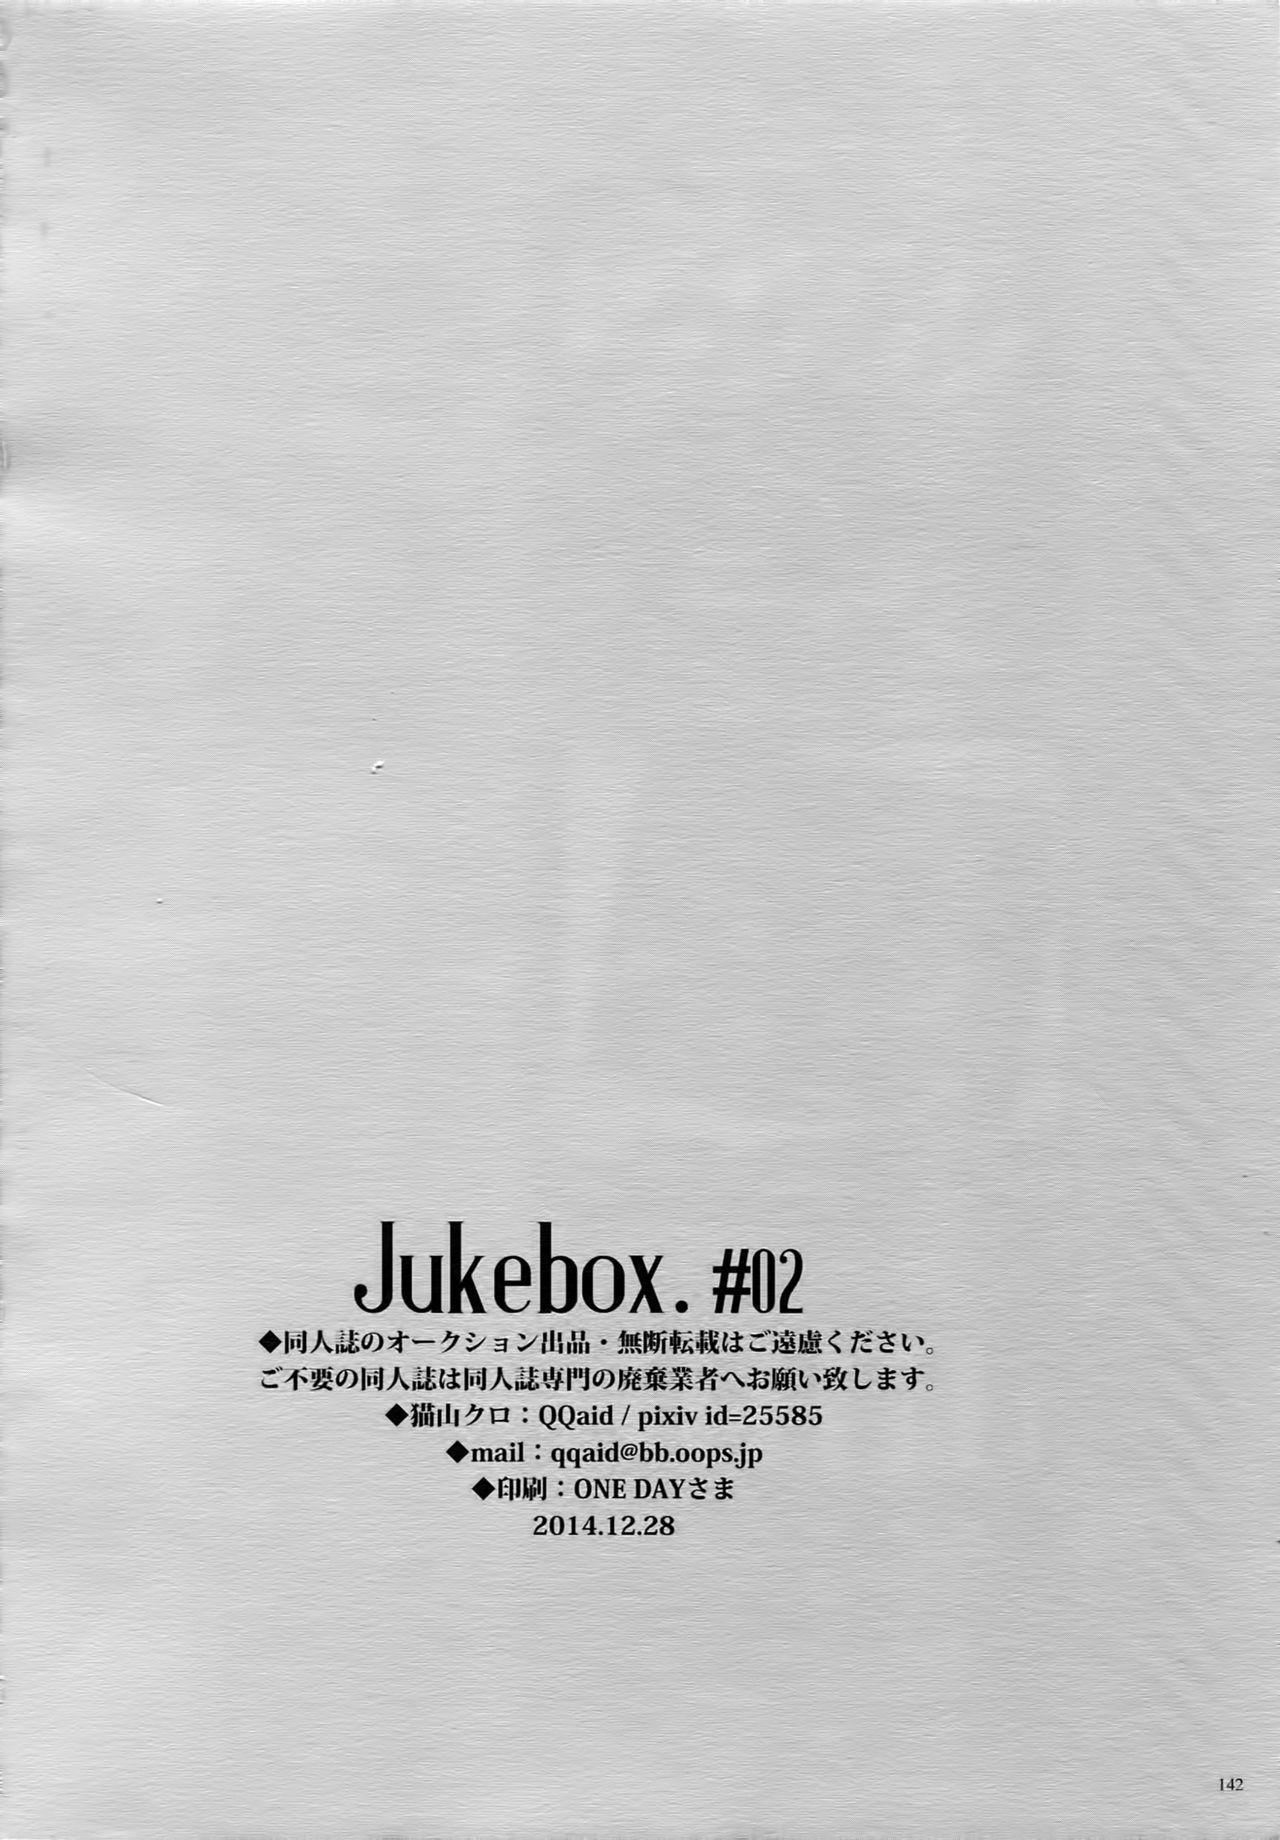 High Jukebox #02 - Kuroko no basuke Lezbi - Page 145